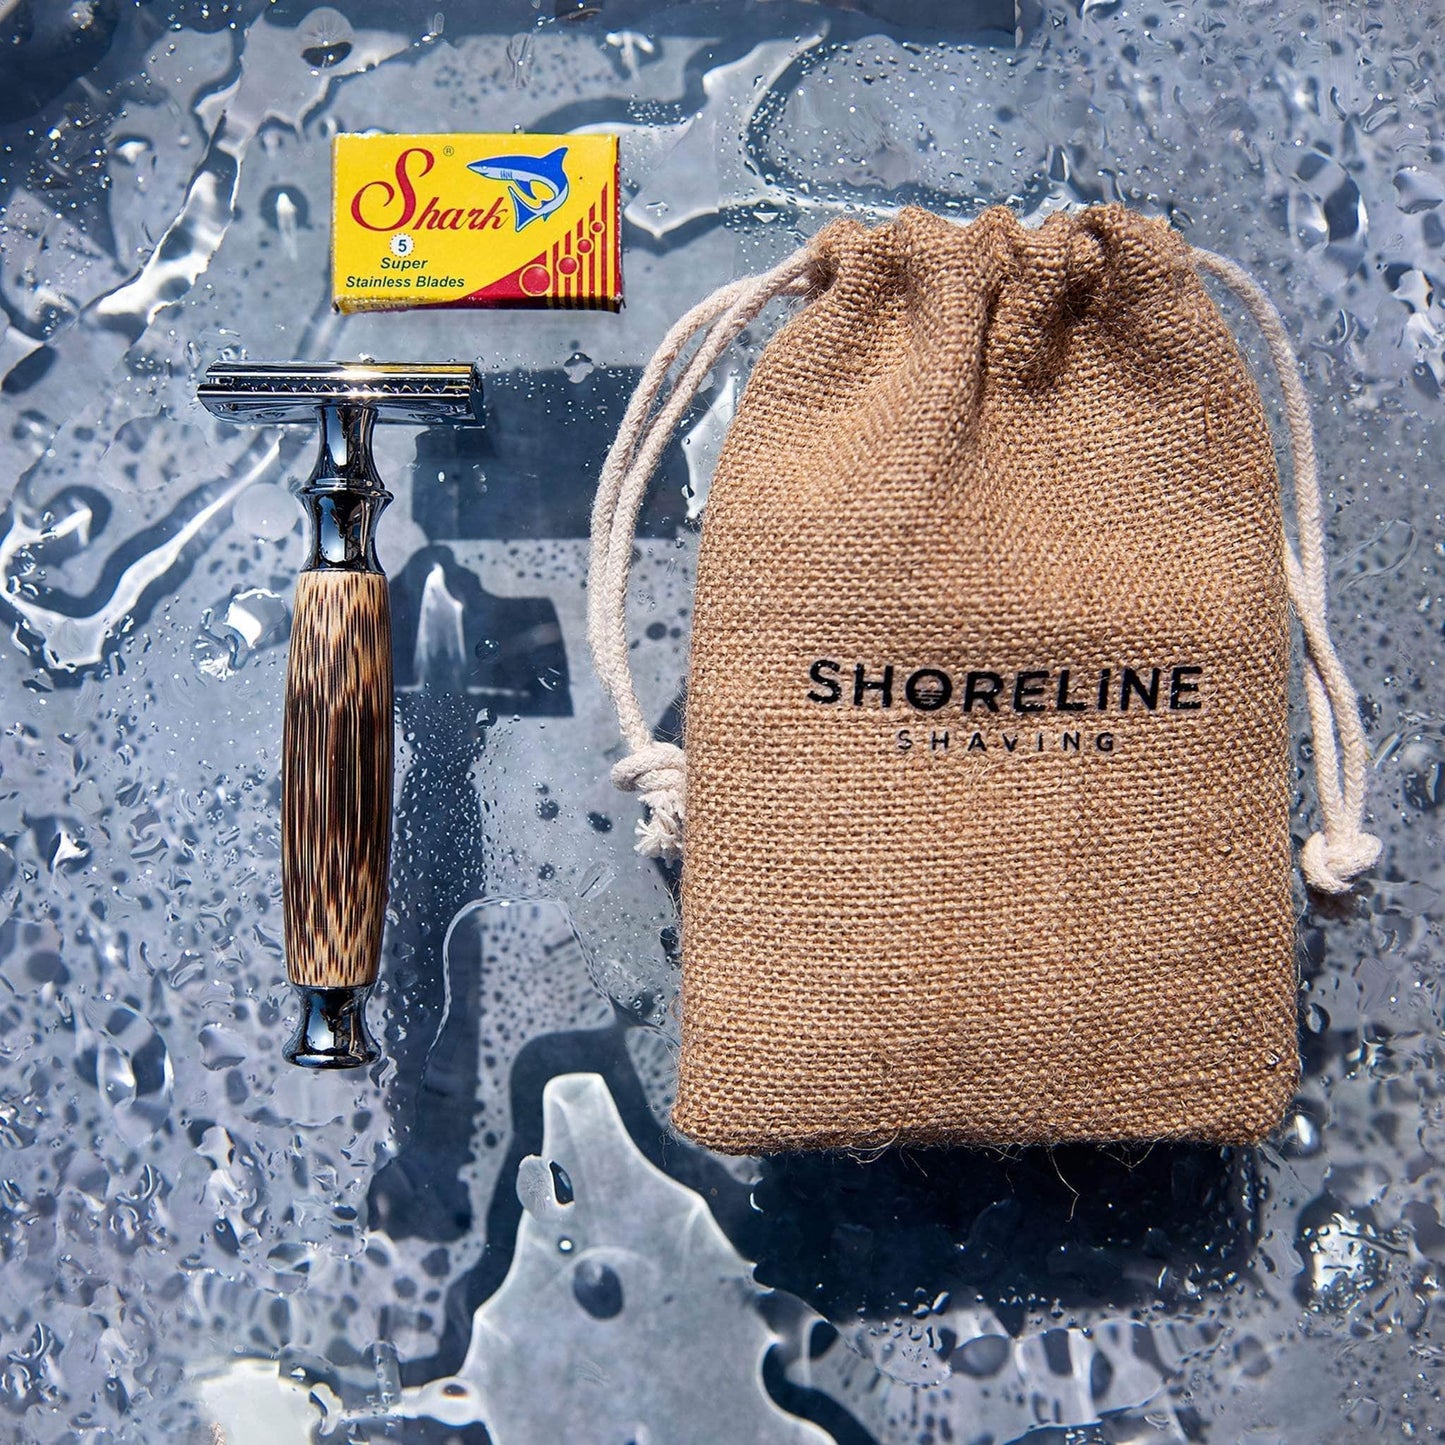 Shoreline Shaving Shaving Accessories Shoreline Shaving - Chrome Silver Bamboo Razor